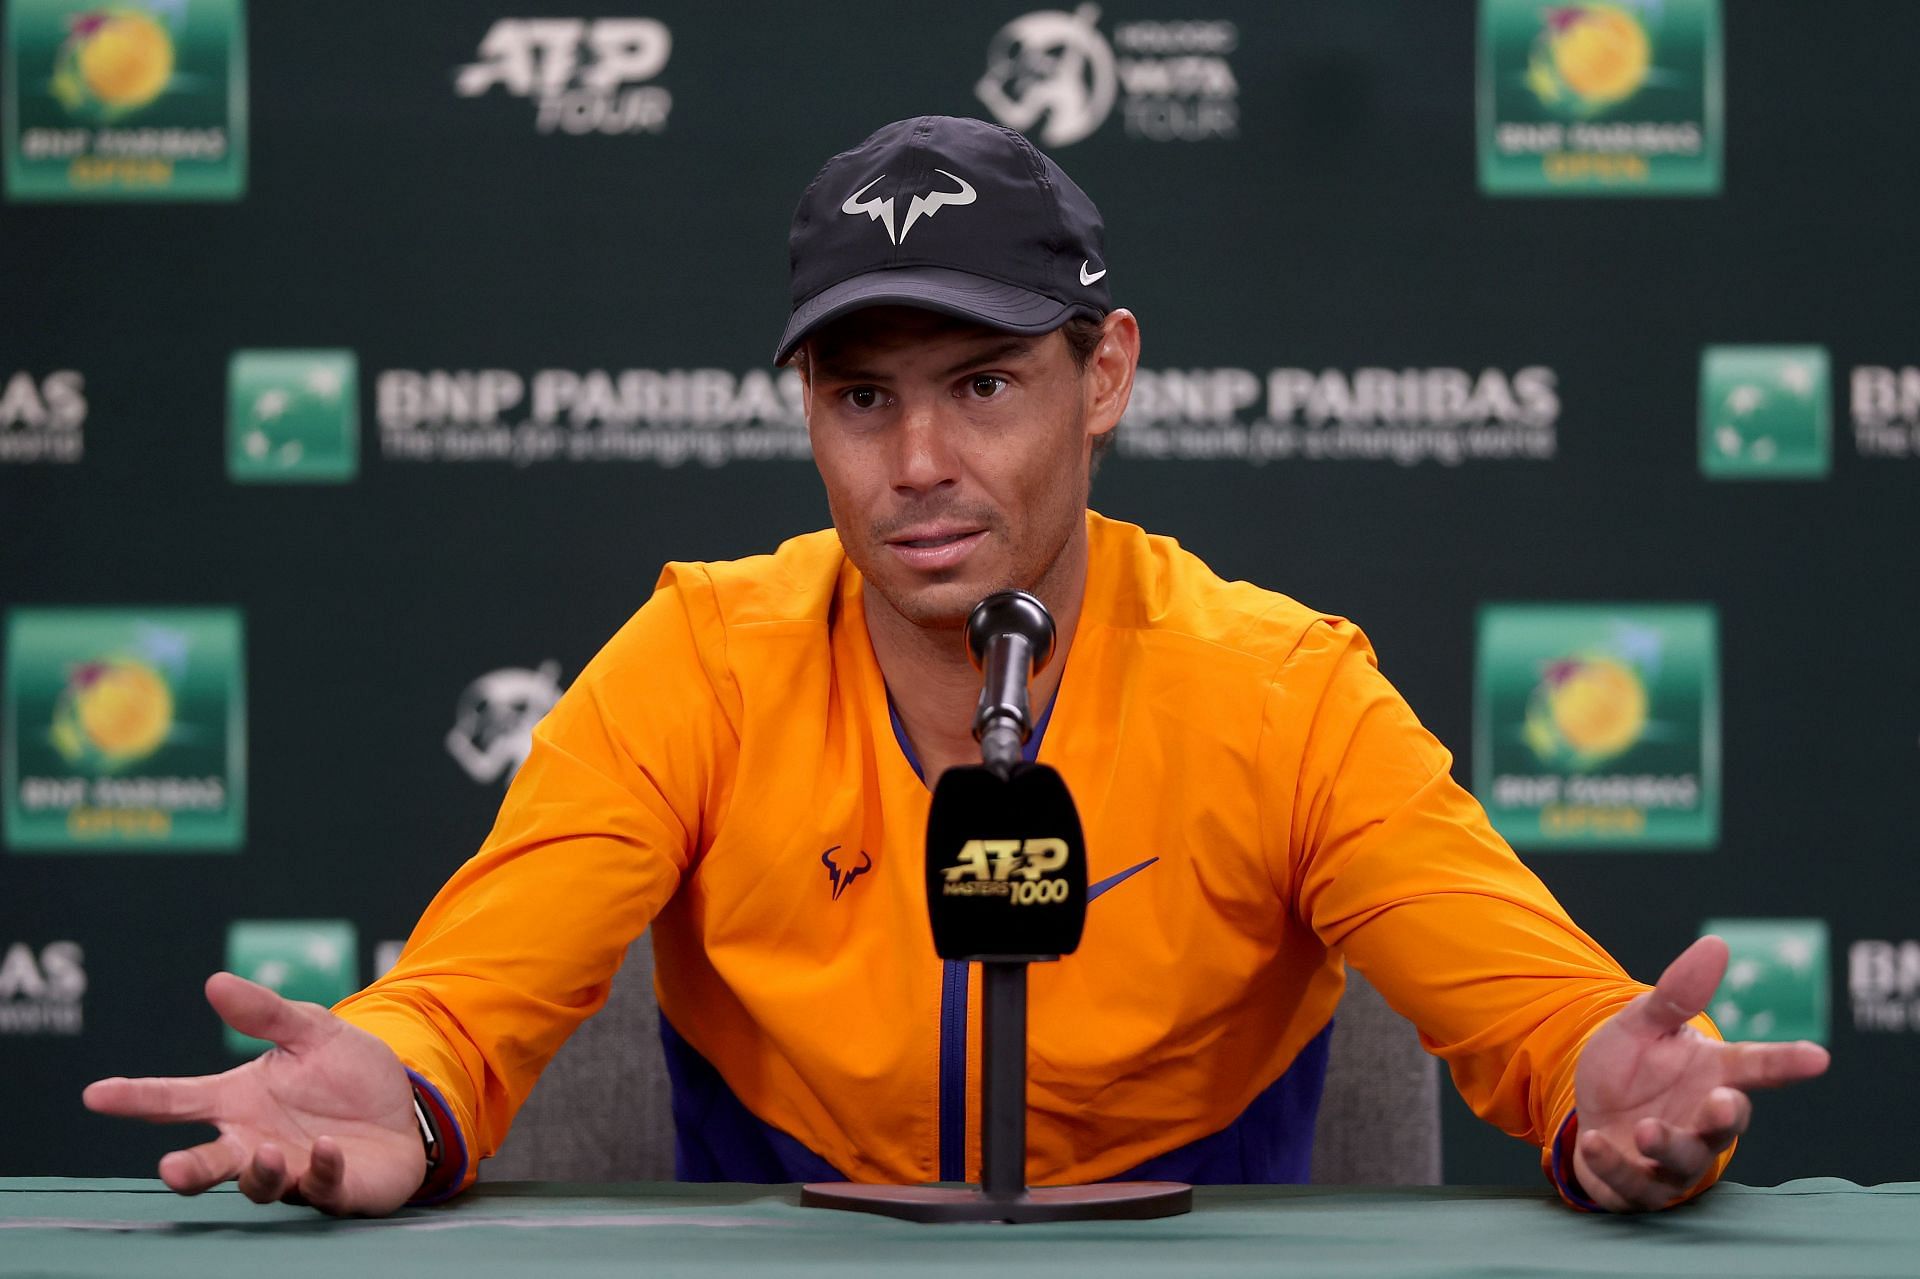 Rafael Nadal kicks off the 2022 Indian Wells Masters against Sebastian Korda